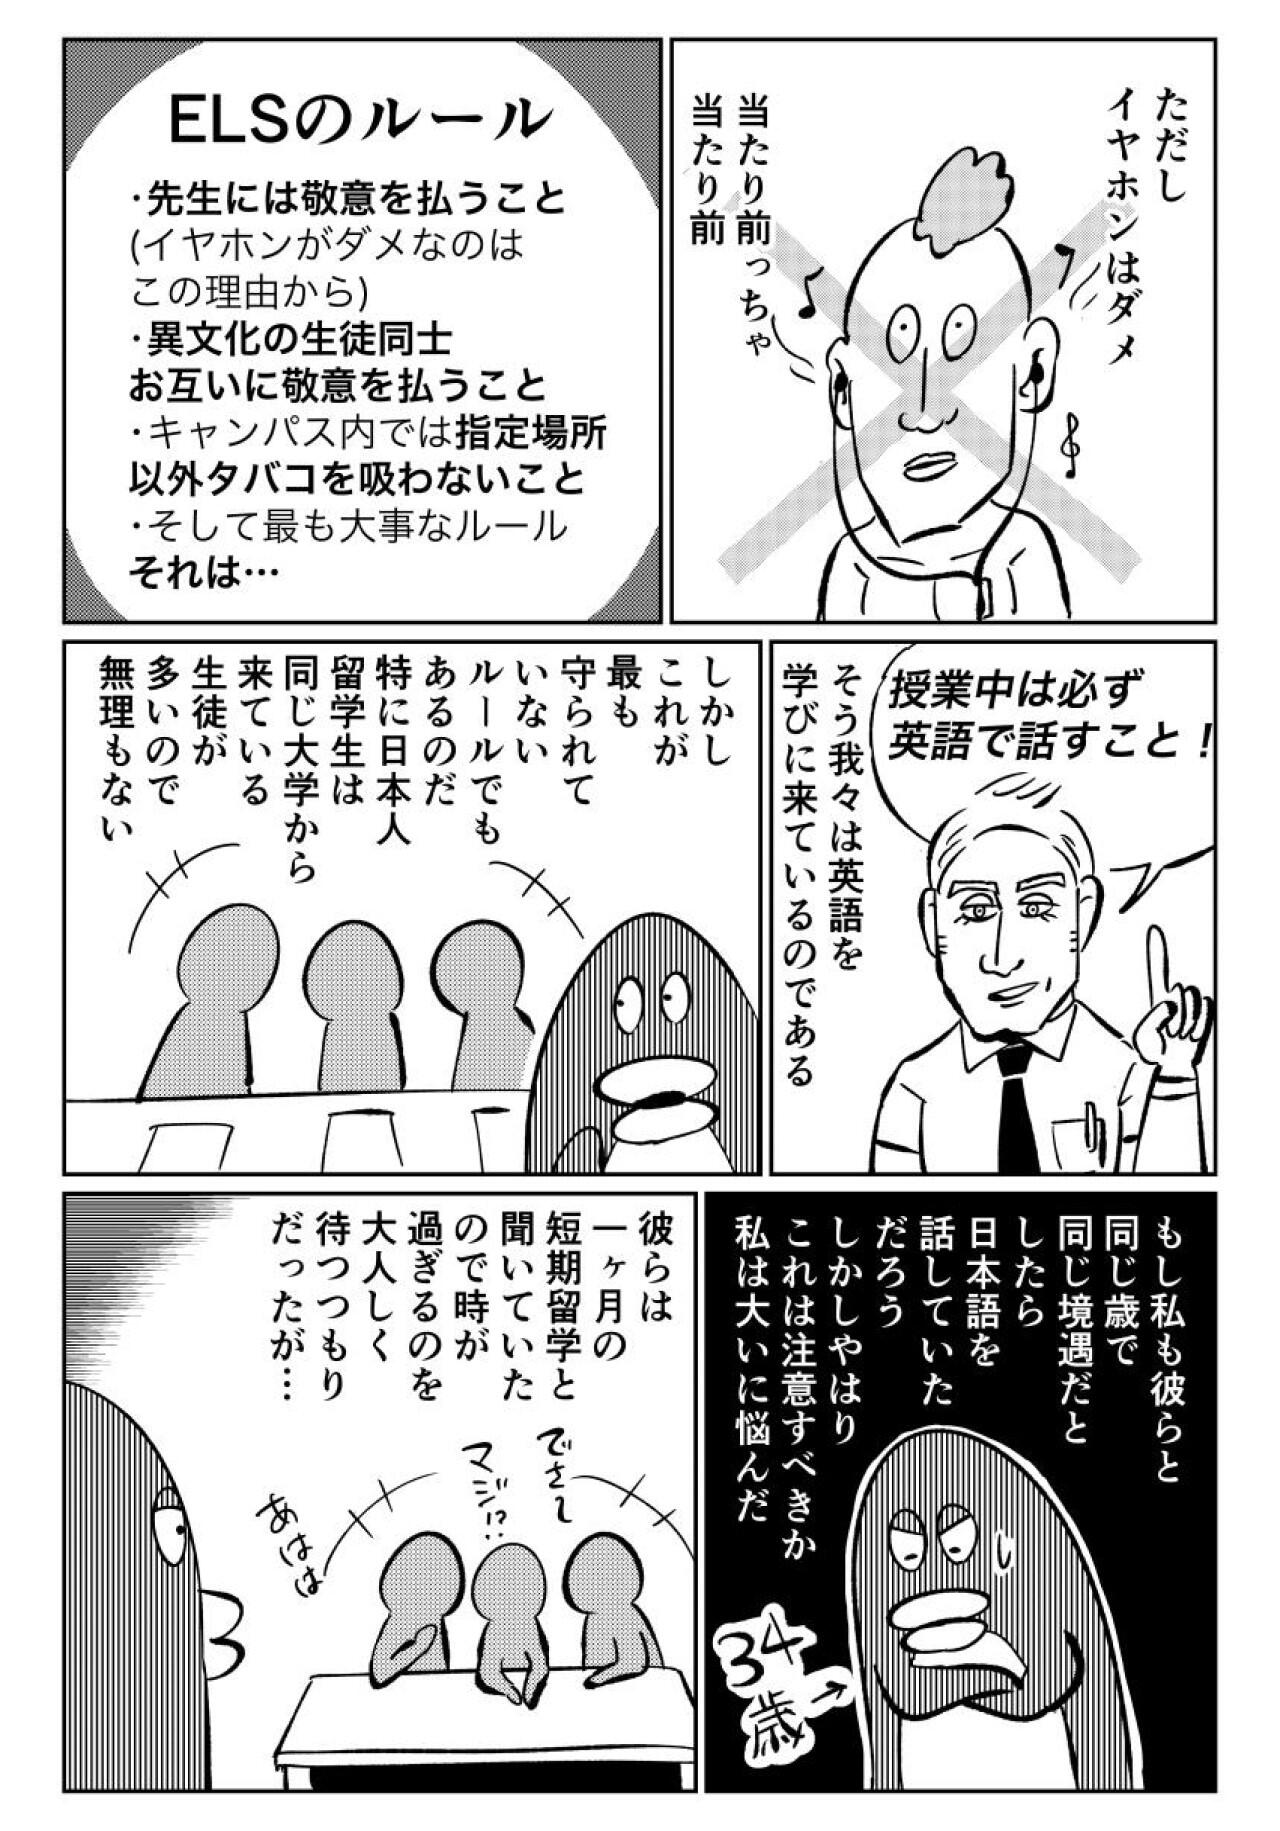 https://www.ryugaku.co.jp/column/images/34sai6_2_1280.jpg